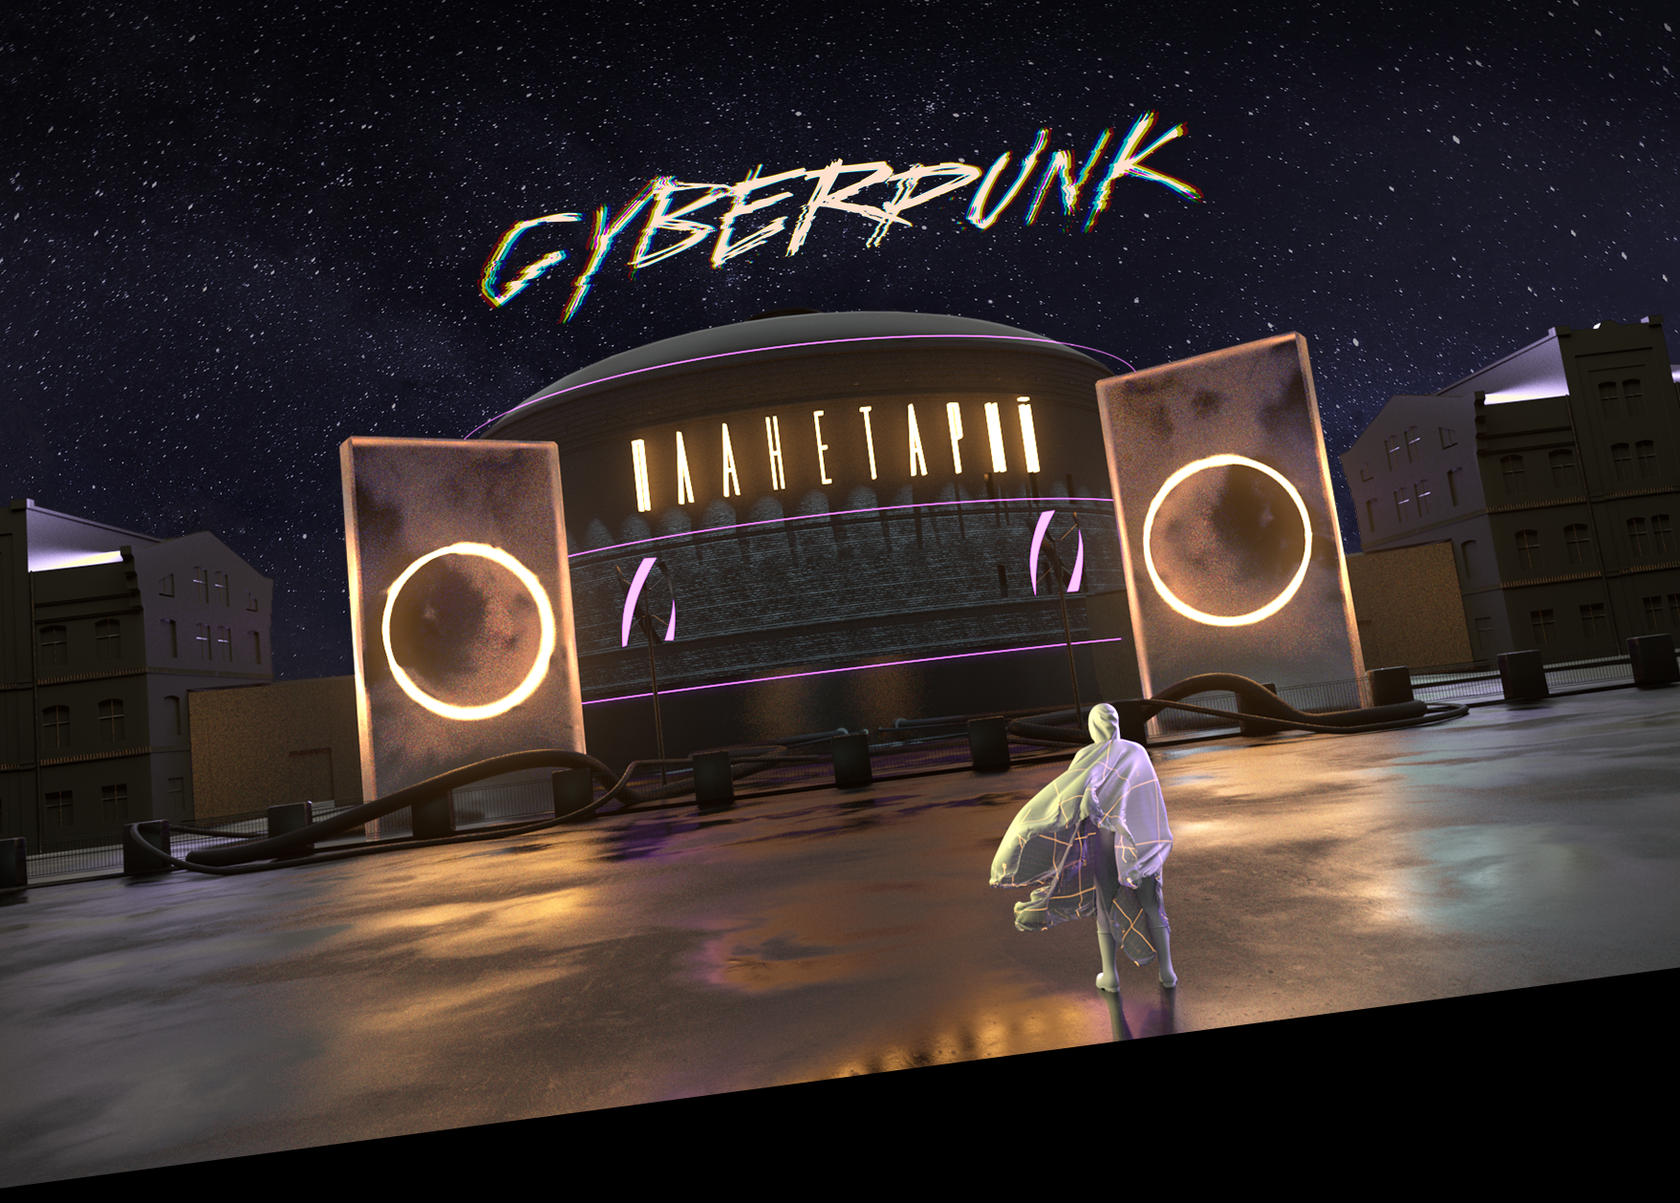 Promised future. "Cyberpunk в планетарии". Cyberpunk: Street Samurai планетарий. Spacelab планетарий 1. Киберпанк-концерт планетарий.